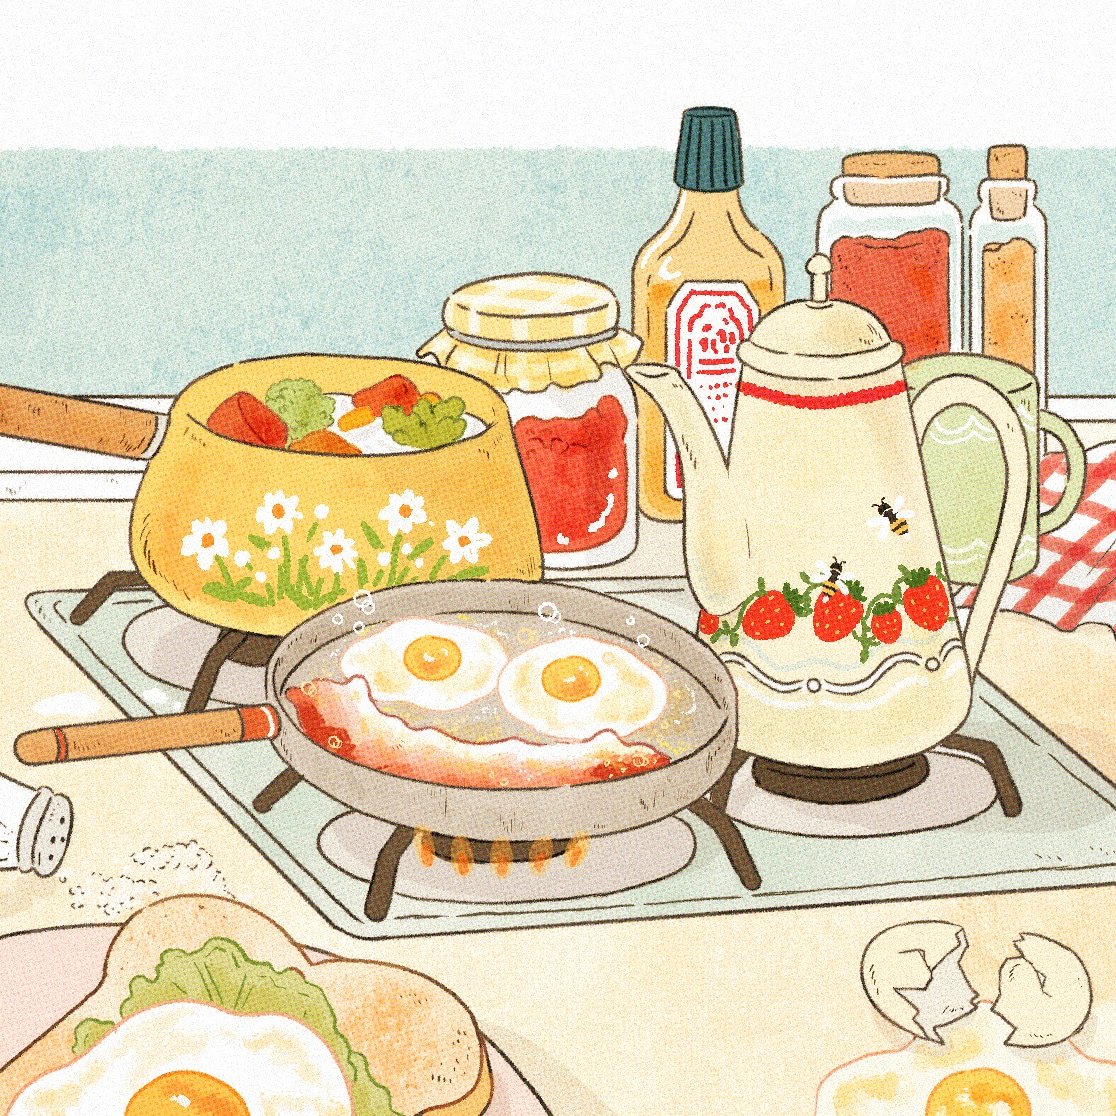 Adorable kitchen illustration